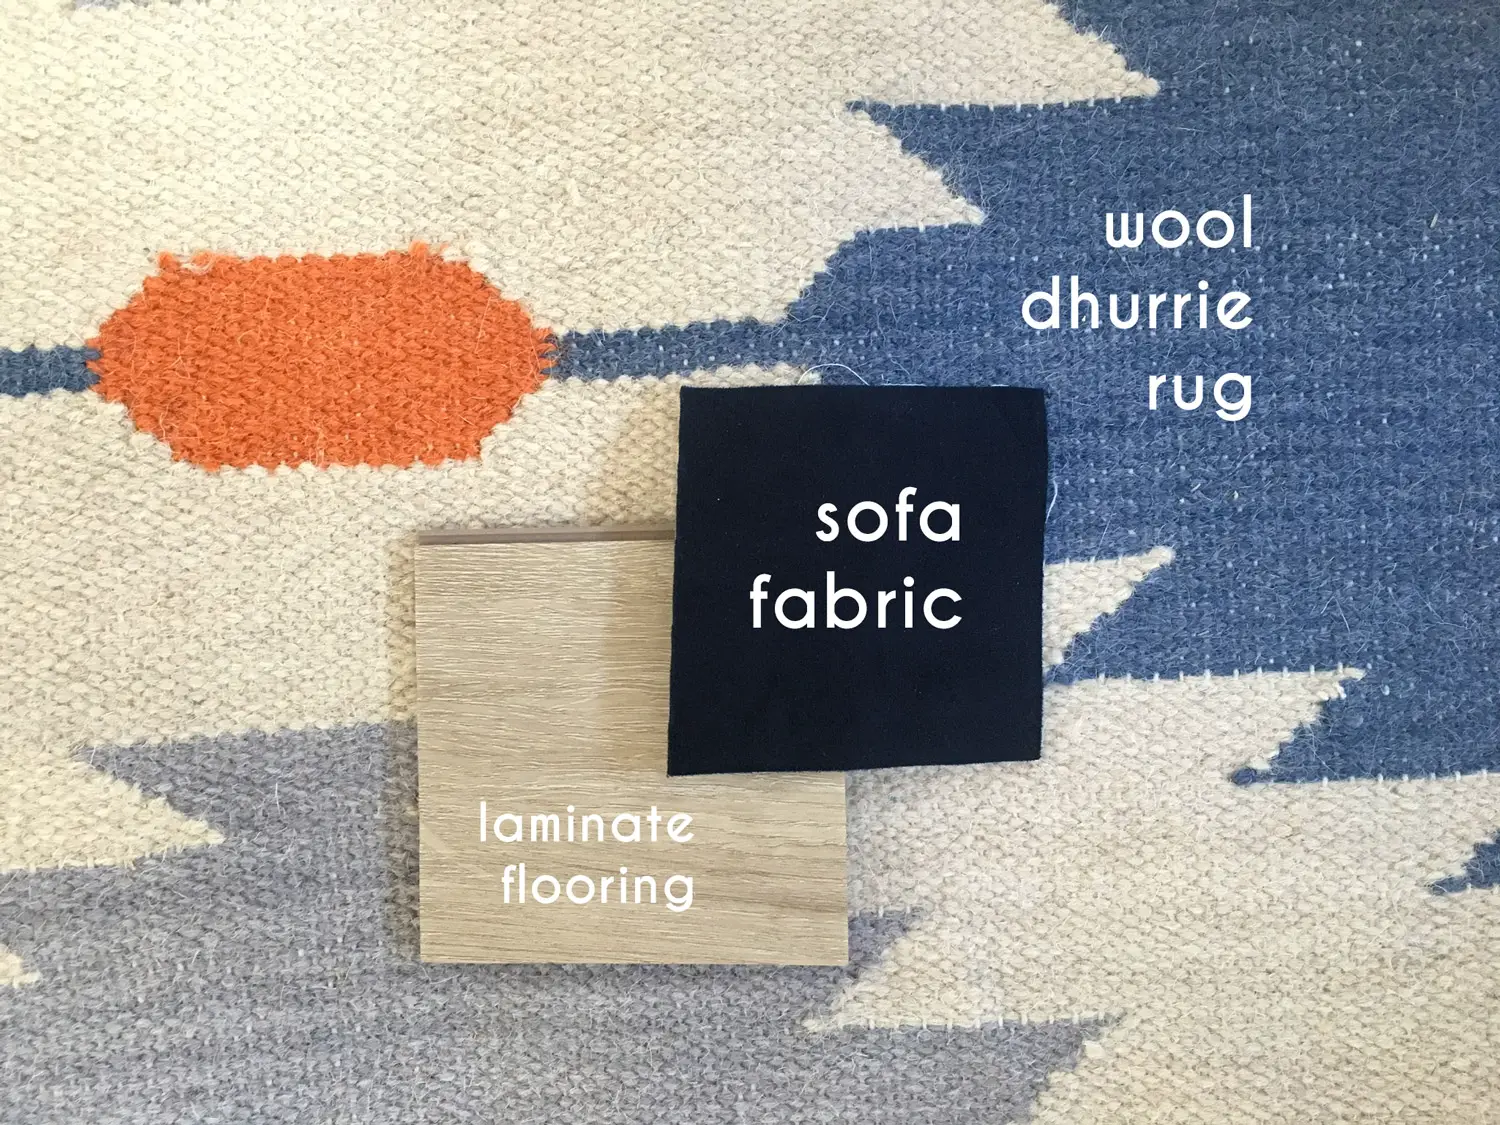 Guest house interior decor samples - flooring, rug and sofa fabric - That Homebird Life Blog